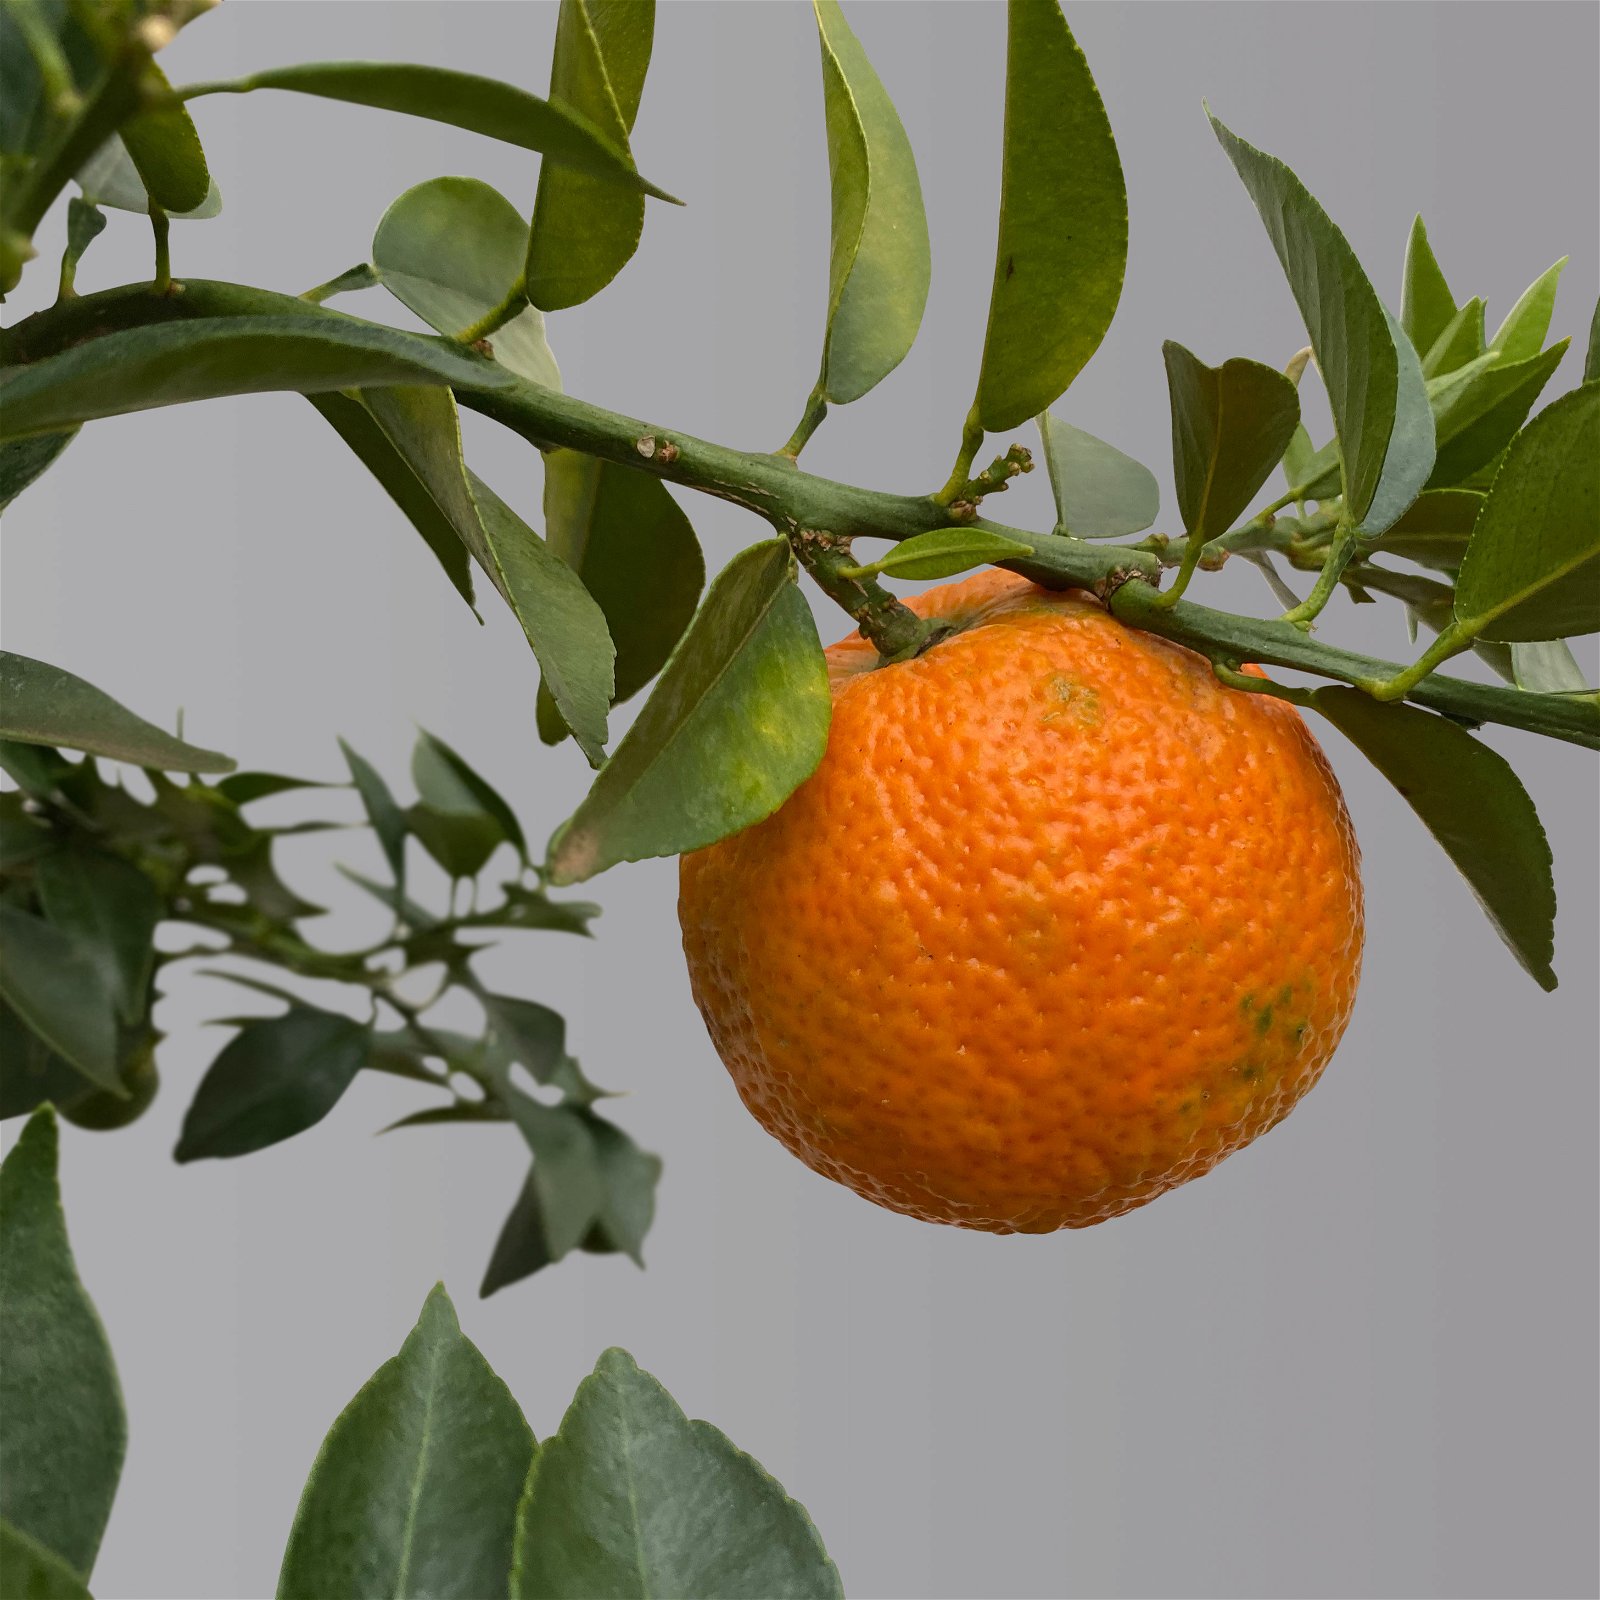 Citrus myrtifolia, Stamm, Topf-Ø 20 cm, Höhe ca. 60 cm